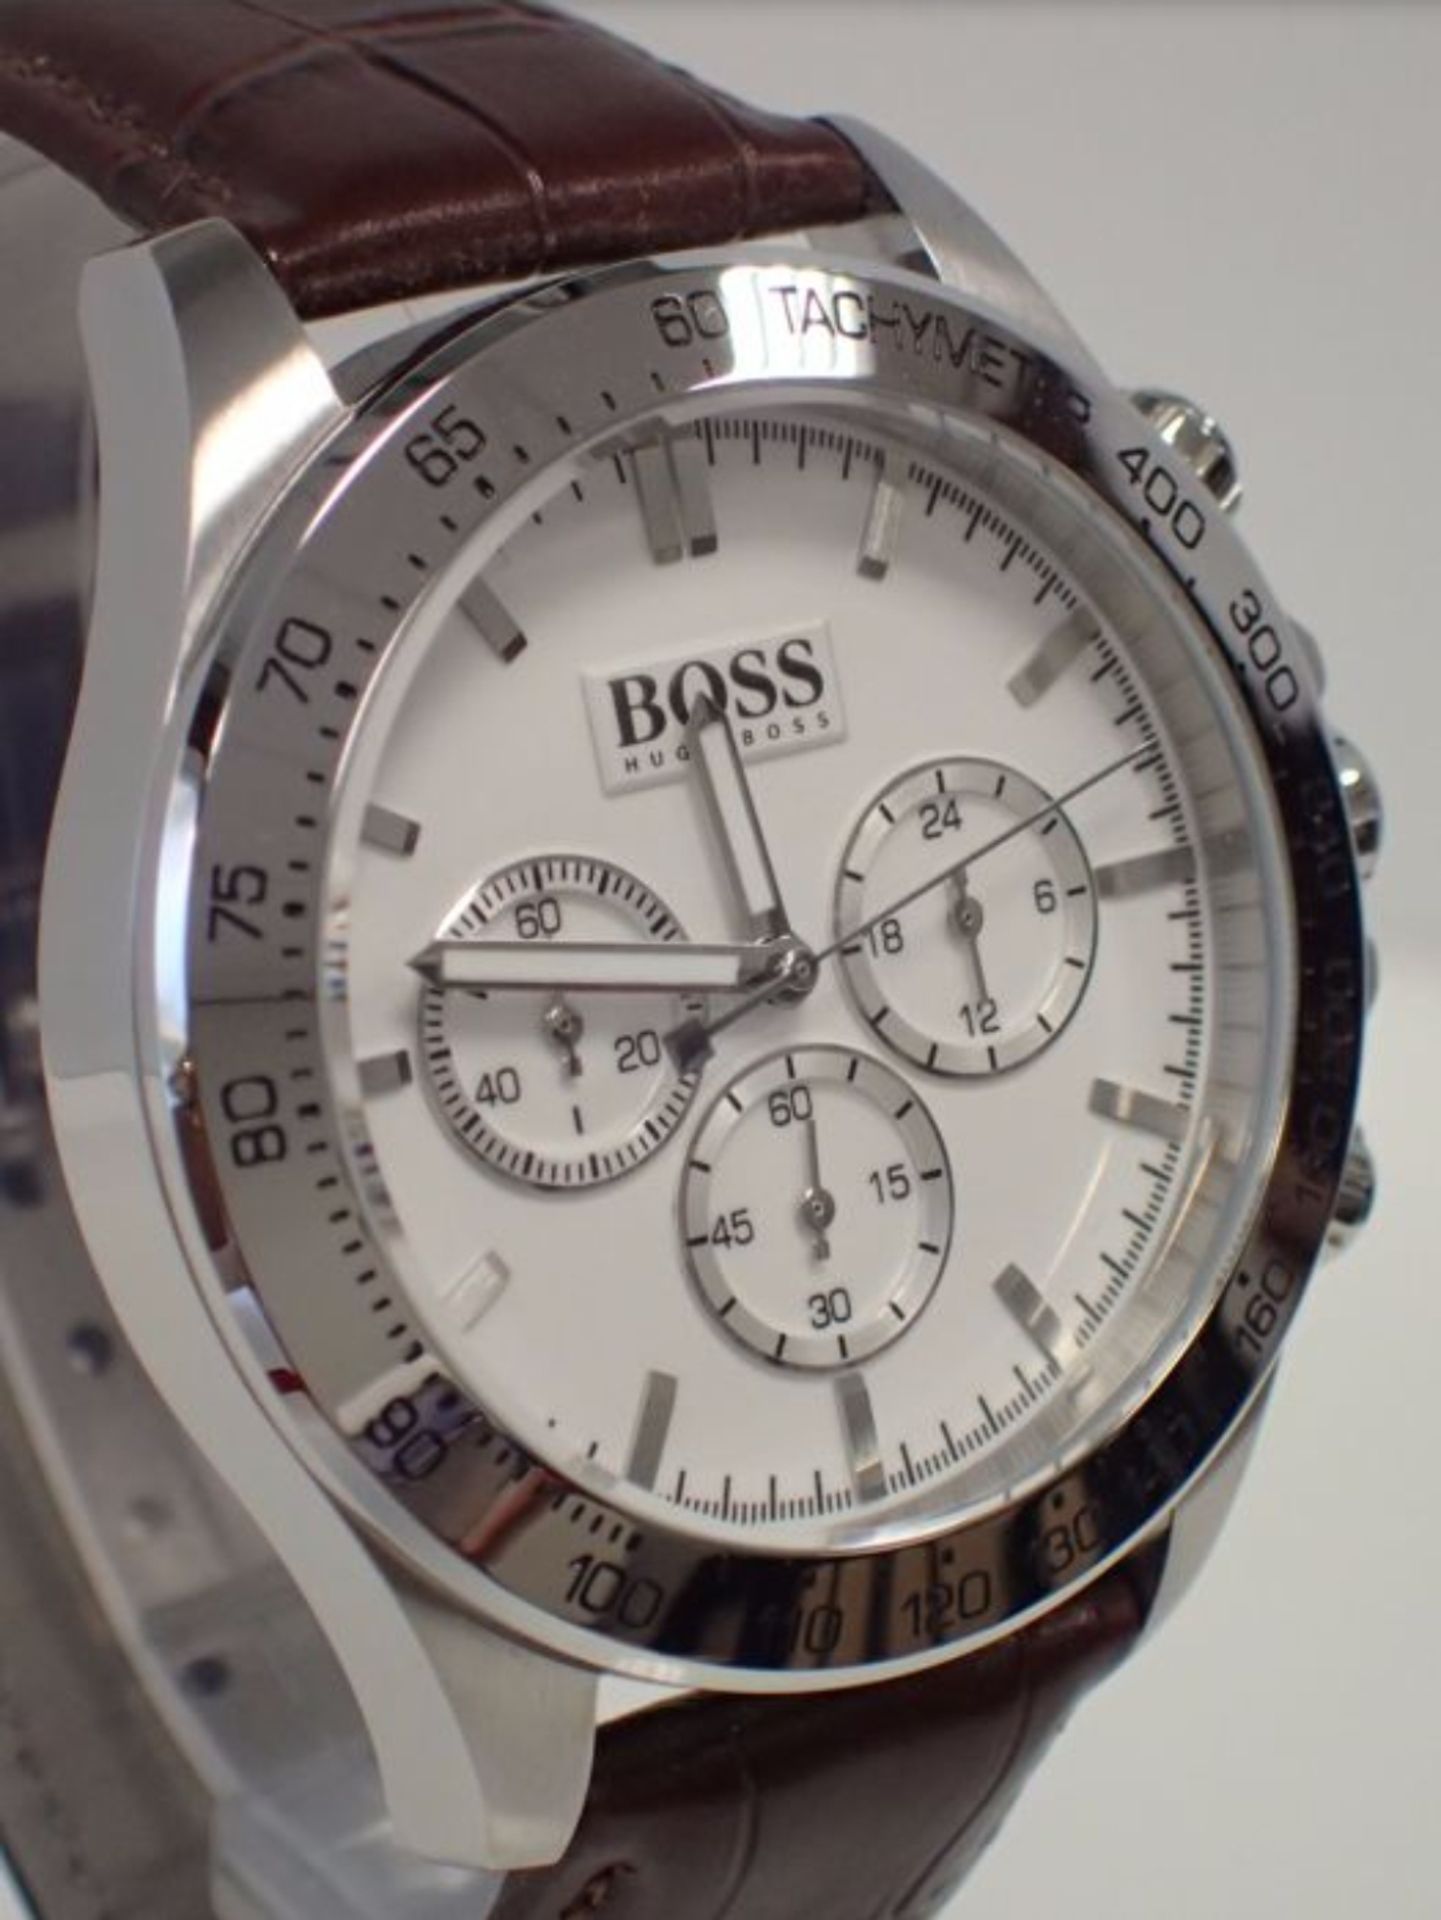 Hugo Boss 1513175 Men's Ikon Brown Leather Strap Chronograph Watch - Image 5 of 6